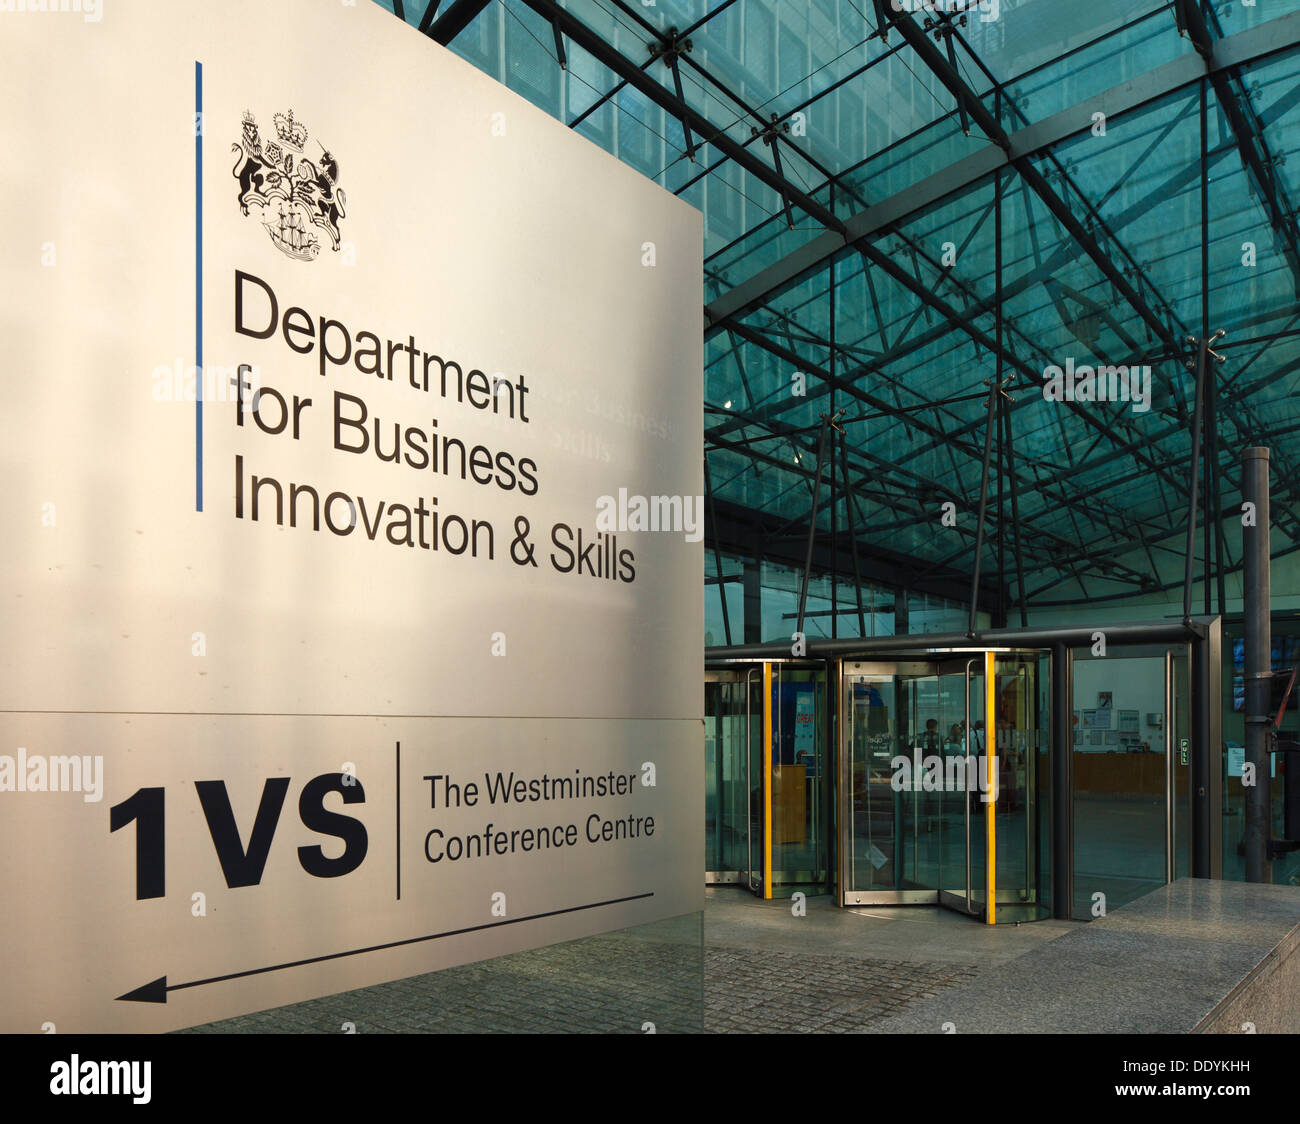 Le Department for Business Innovation & Skills, 1 bis, rue Victoria, Londres. Banque D'Images